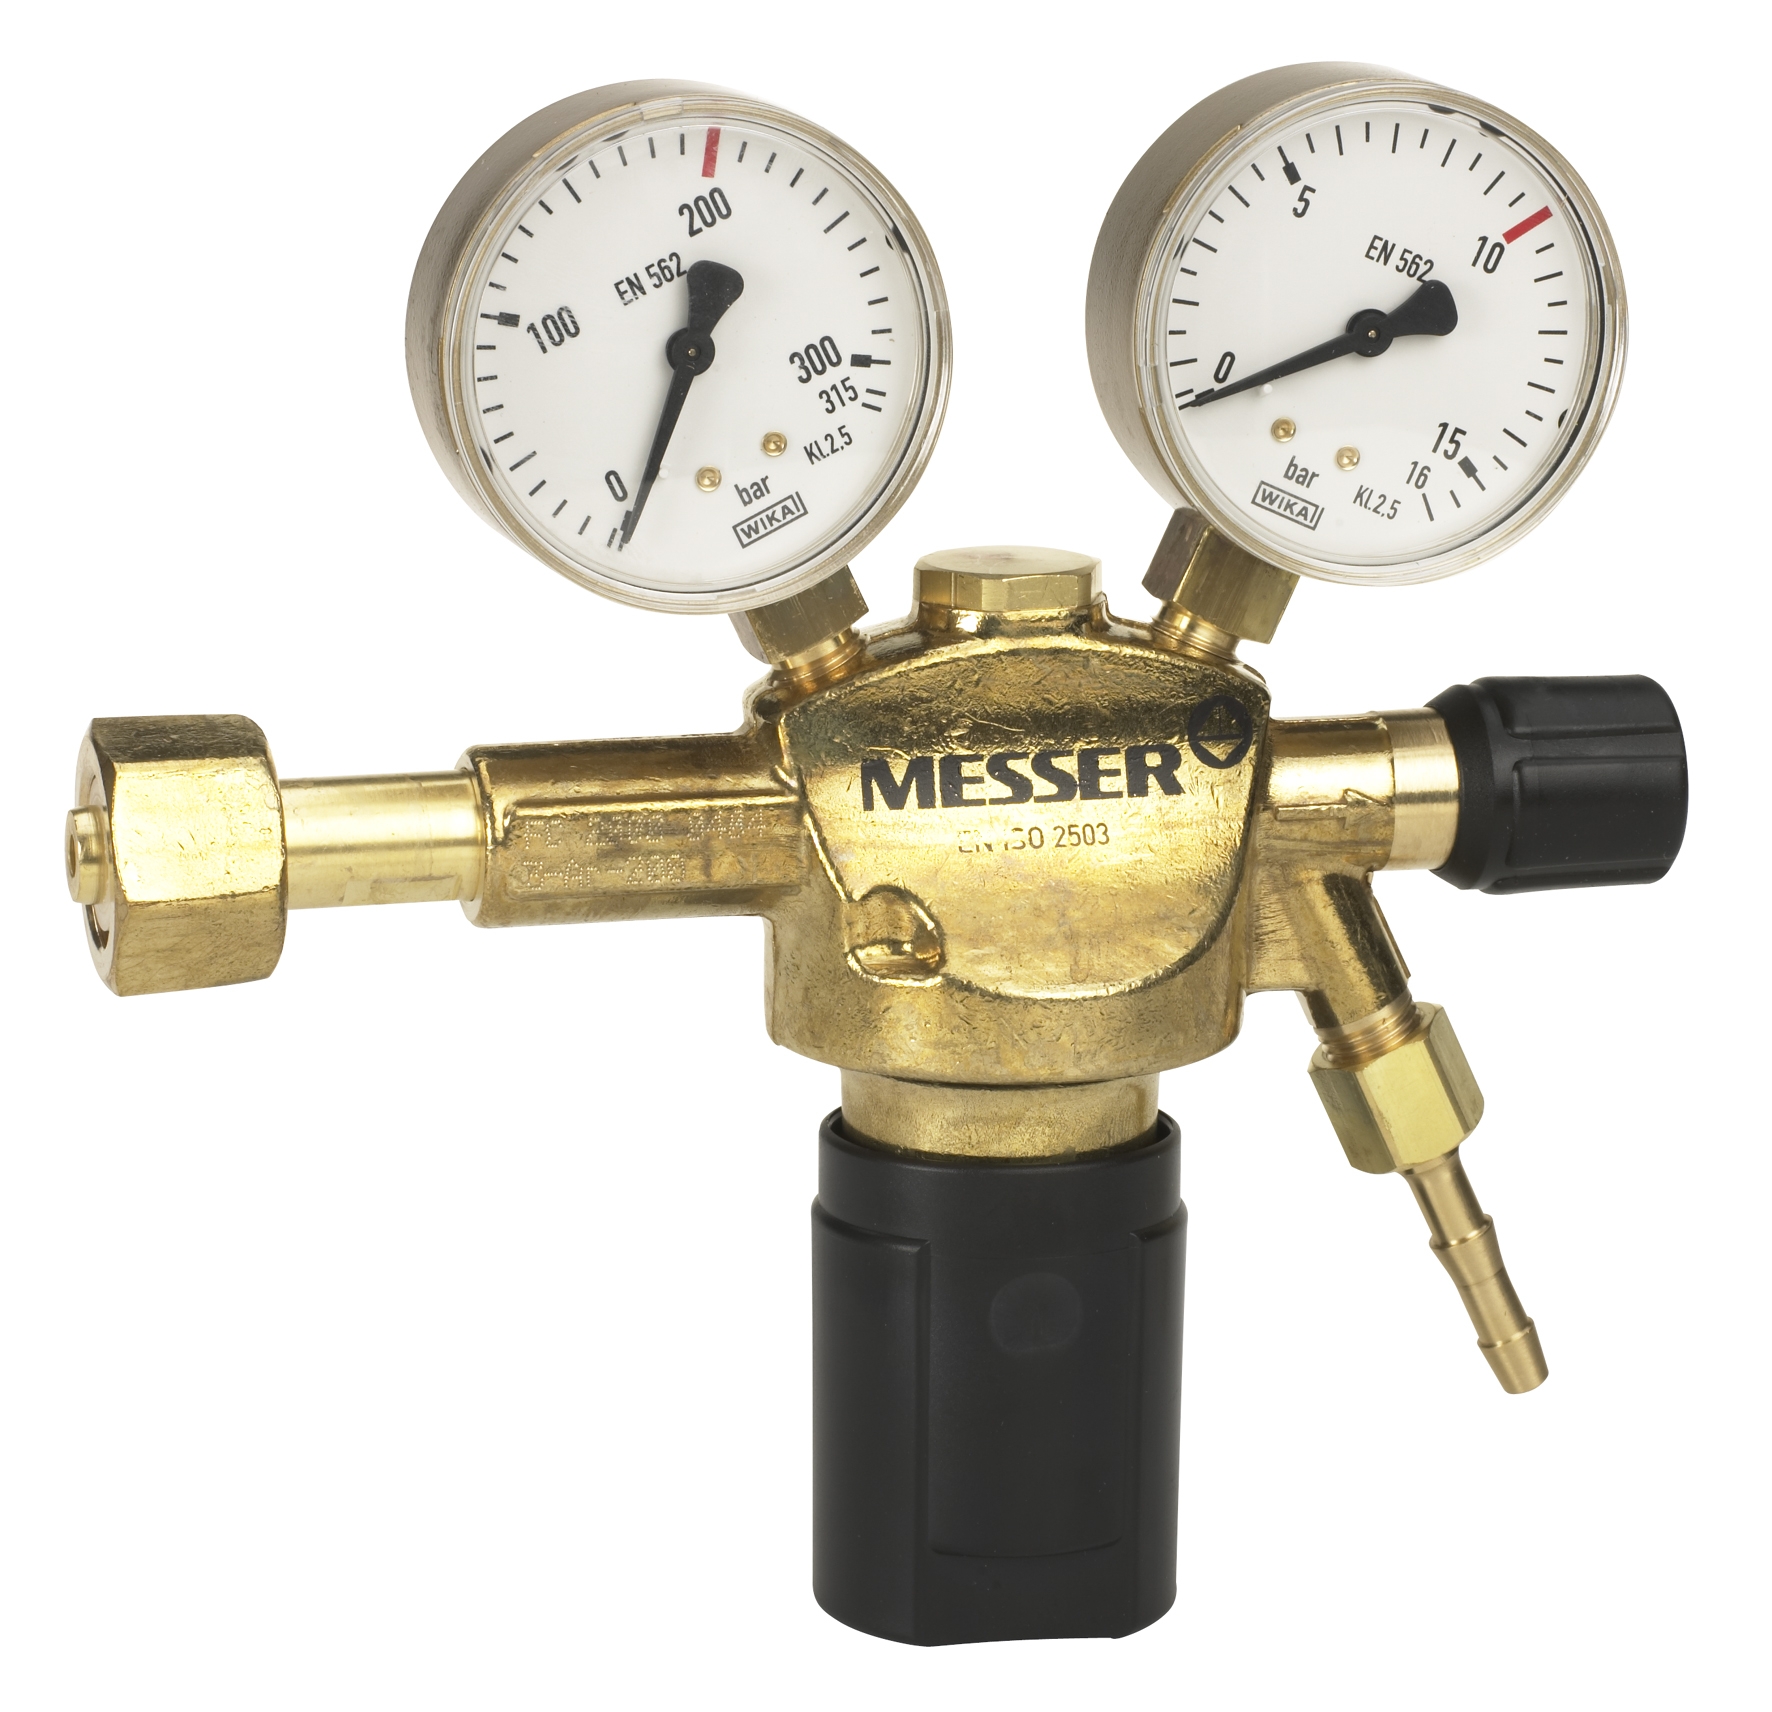 Pressure regulator for oxygen